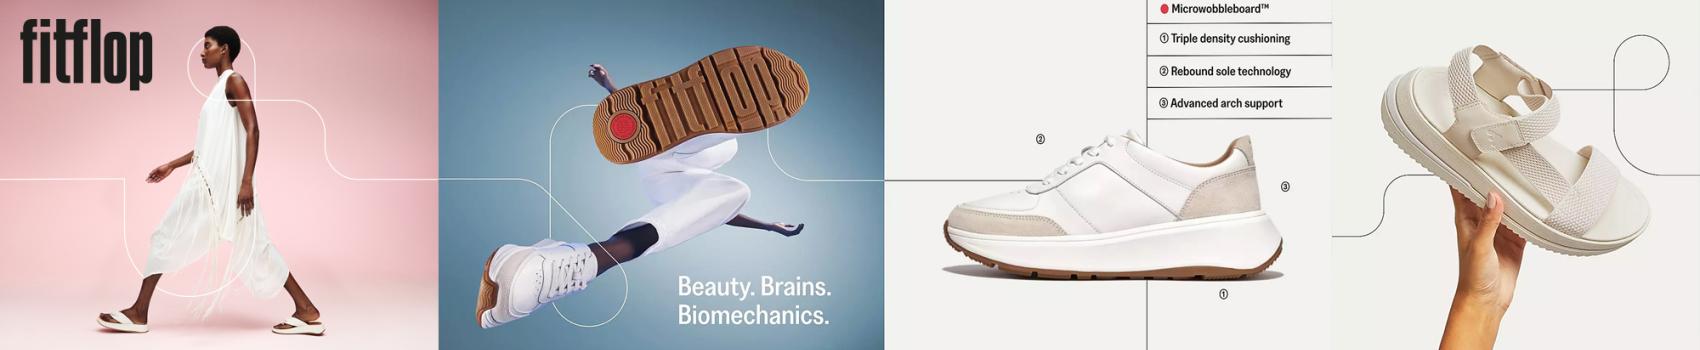 FitFlop. Beauty. Brains. Biomechanics